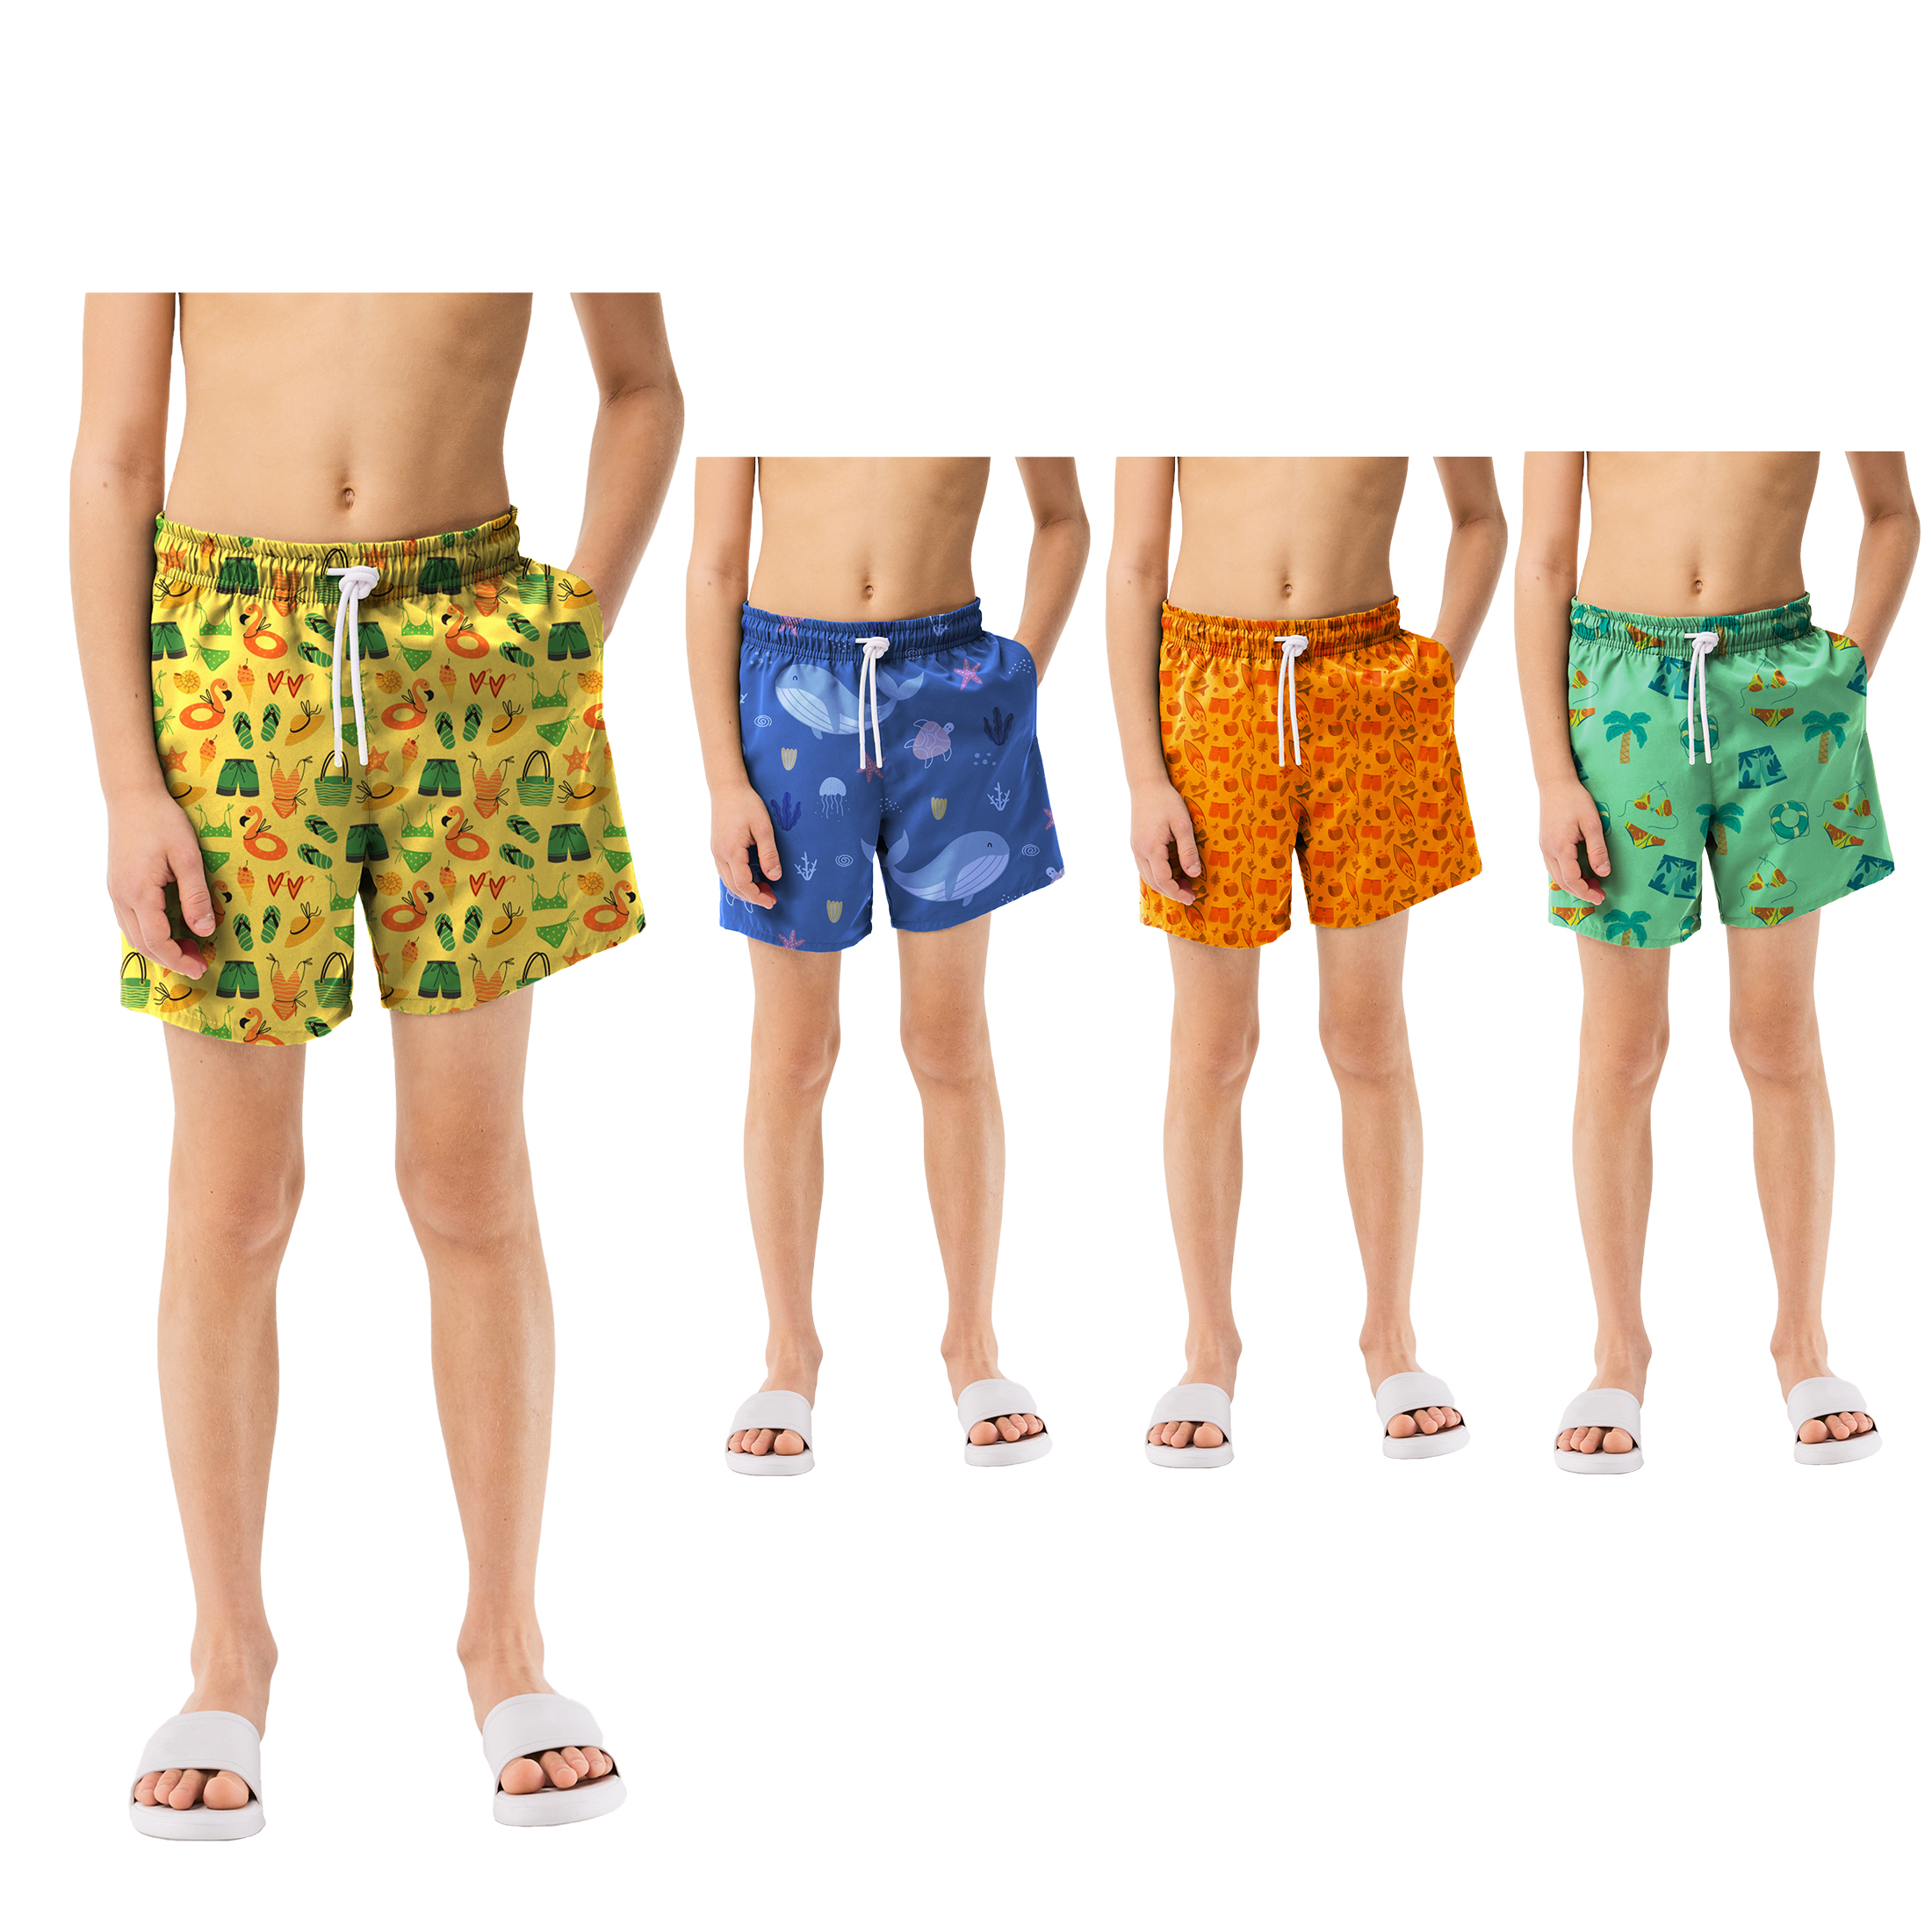 4-Pack Boy's Beach Summer Swim Trunk Shorts Printed Bathing Quick Dry UPF 50+ Comfy Swimsuit - XL